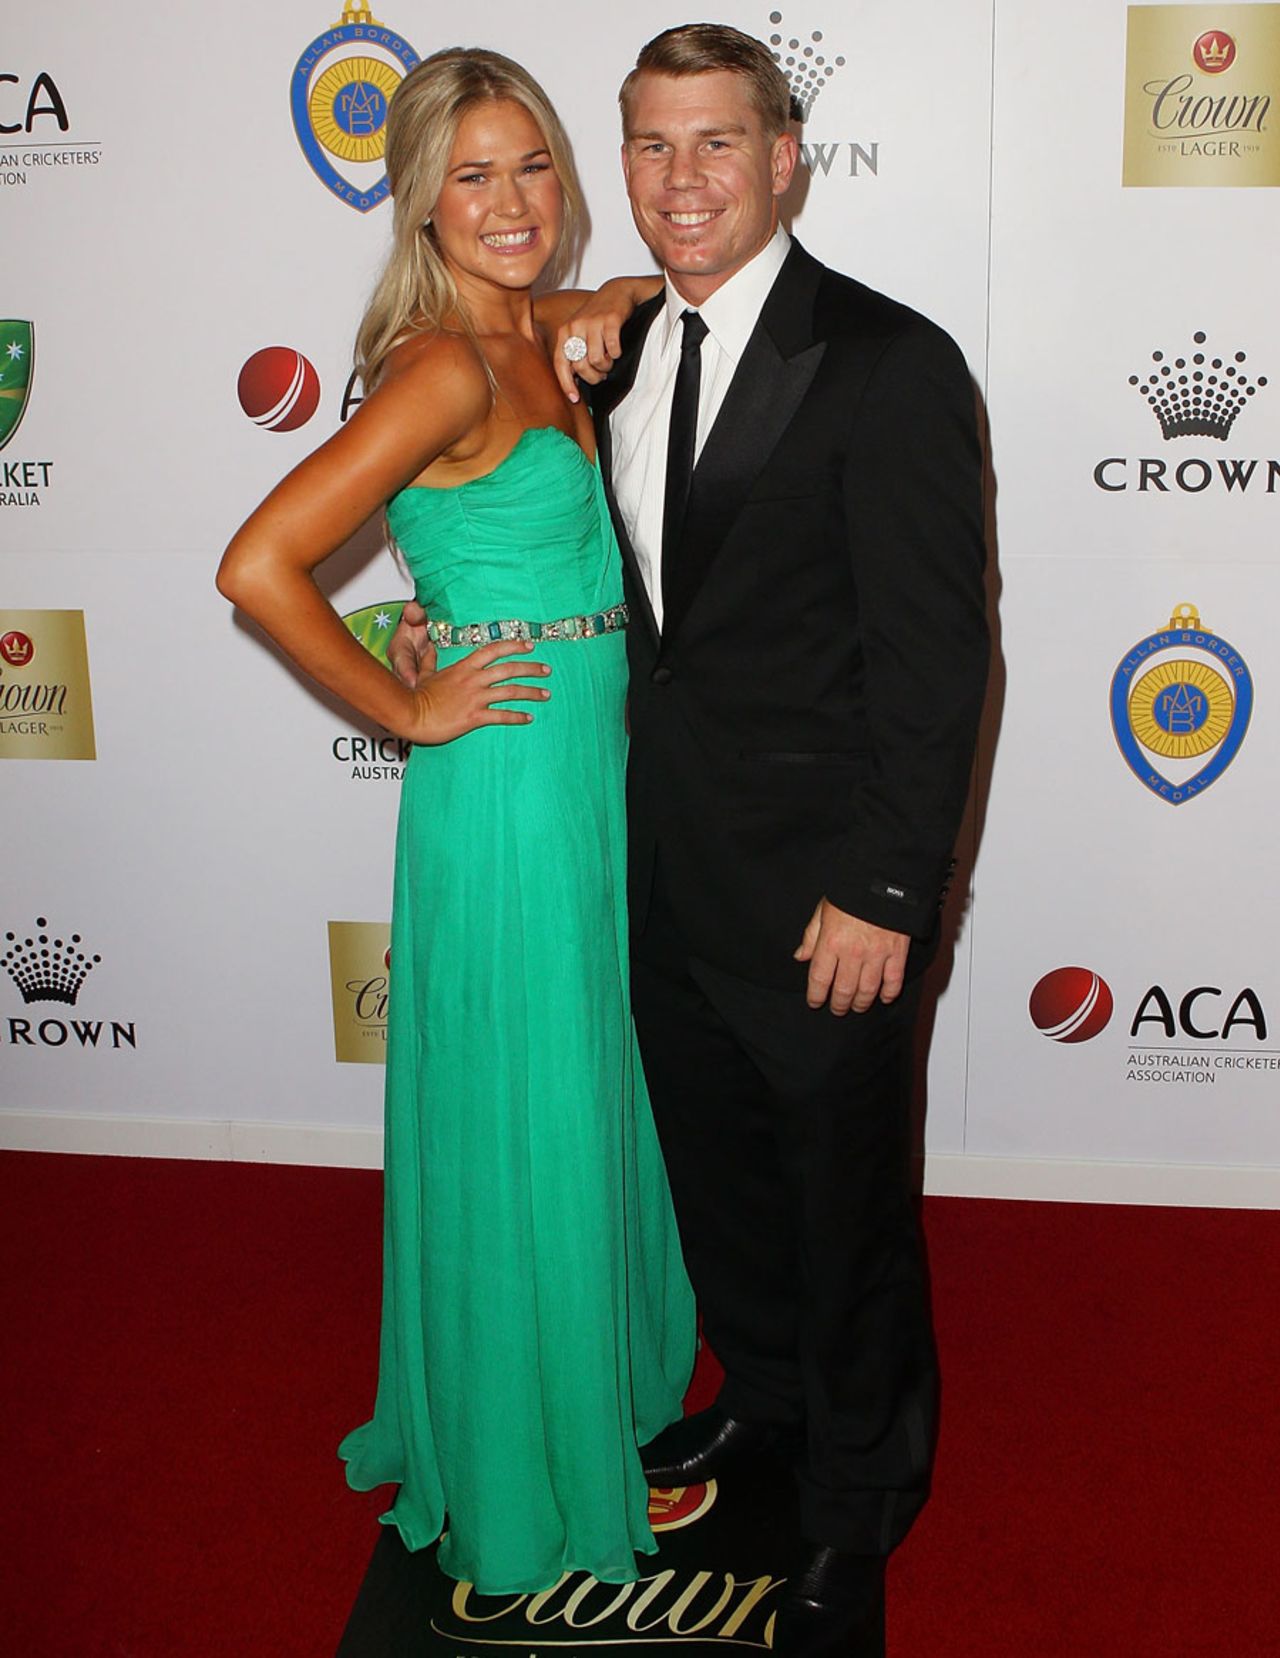 David Warner with Samantha Williams at the 2012 Allan Border Medal awards, Melbourne, February 27, 2012 